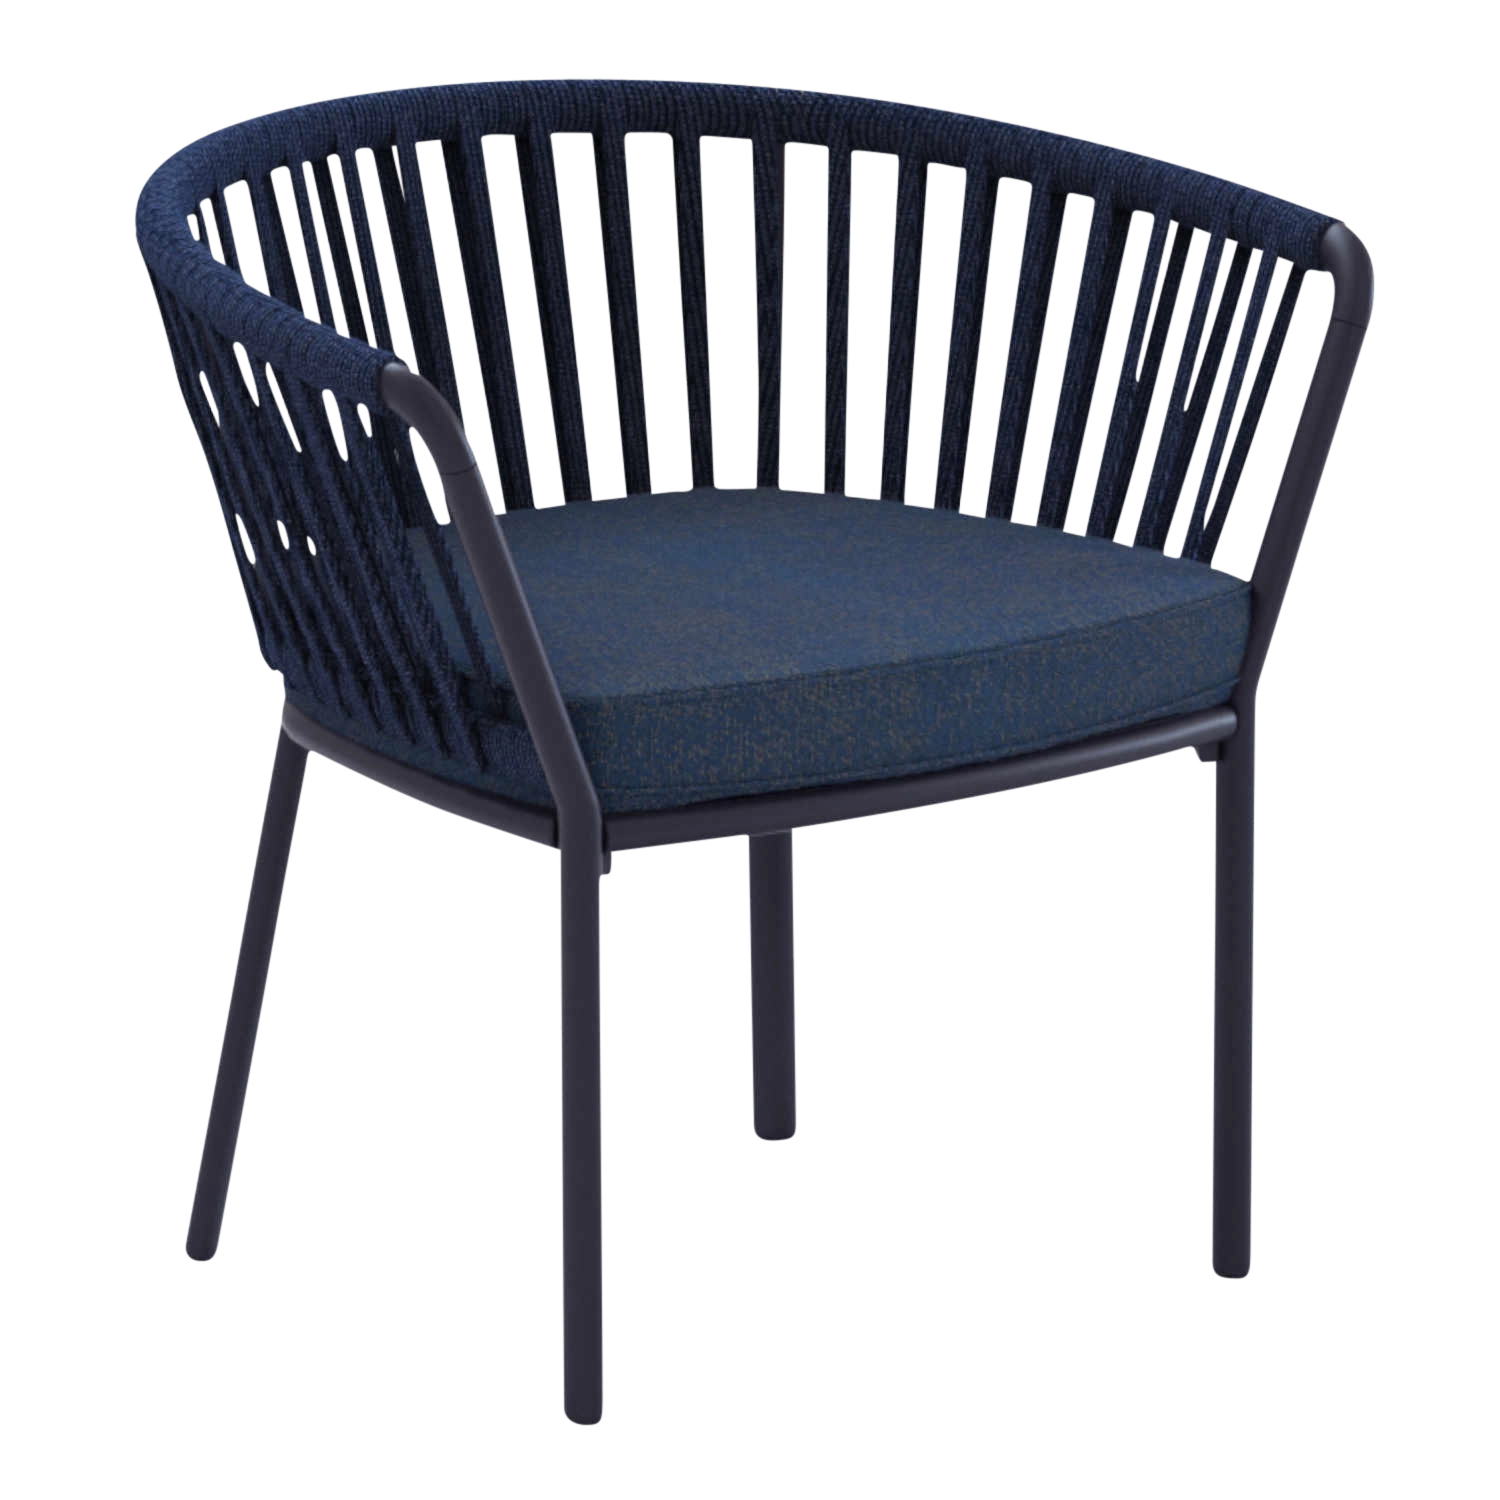 Ria 7605 Sessel, Gestell aluminium lackiert, creamy white (cremeweiss), Rope c06 sunset (mehrfarbig), Stoff range 1 solids, mineral (blau) von FAST